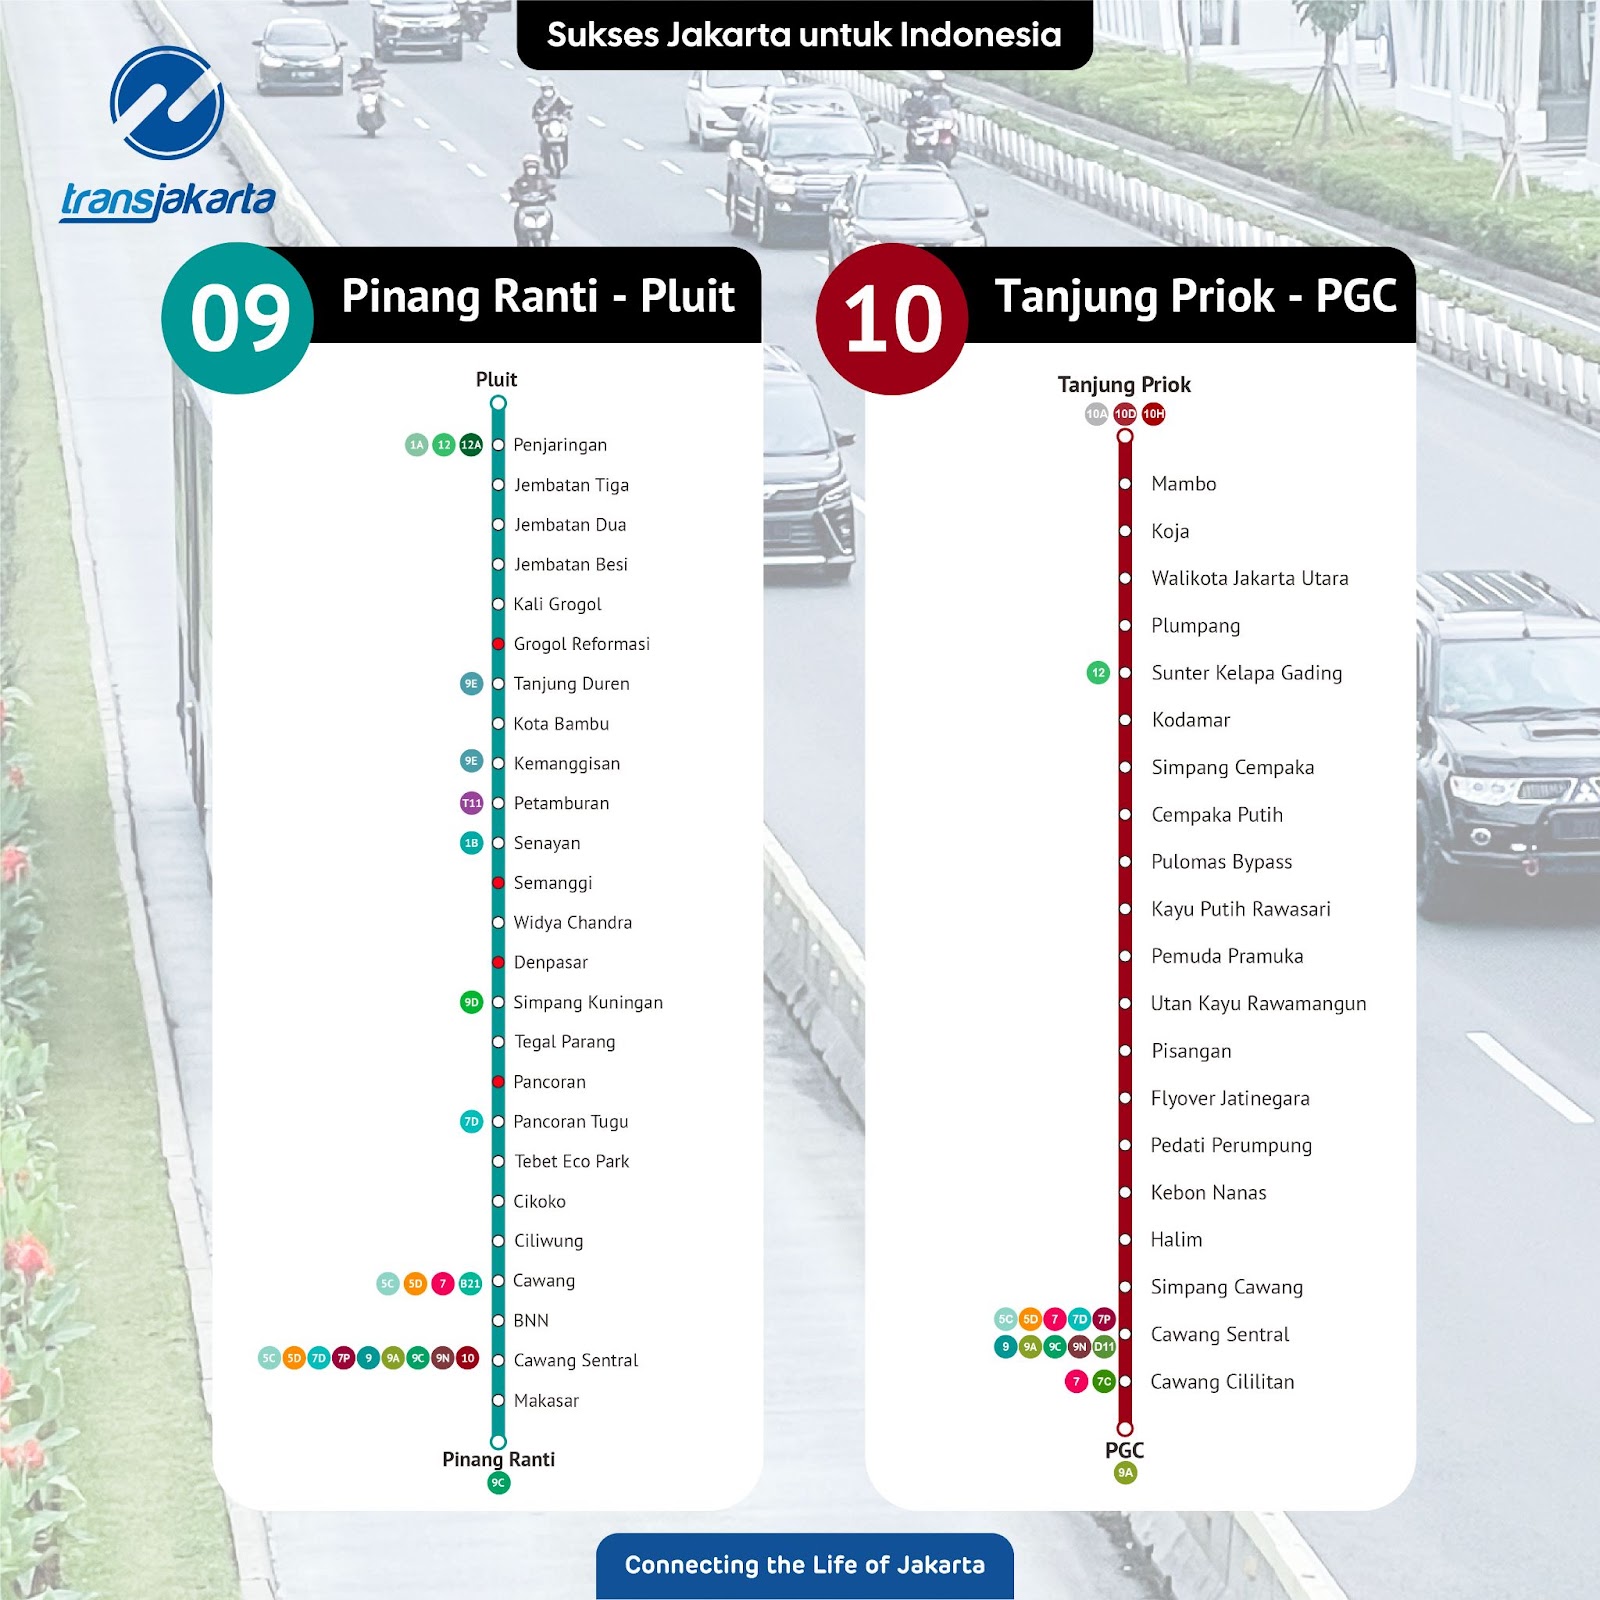 Corridor 9 and corridor 10 routes of Transjakarta. Source:&nbsp;@pt_transjakarta